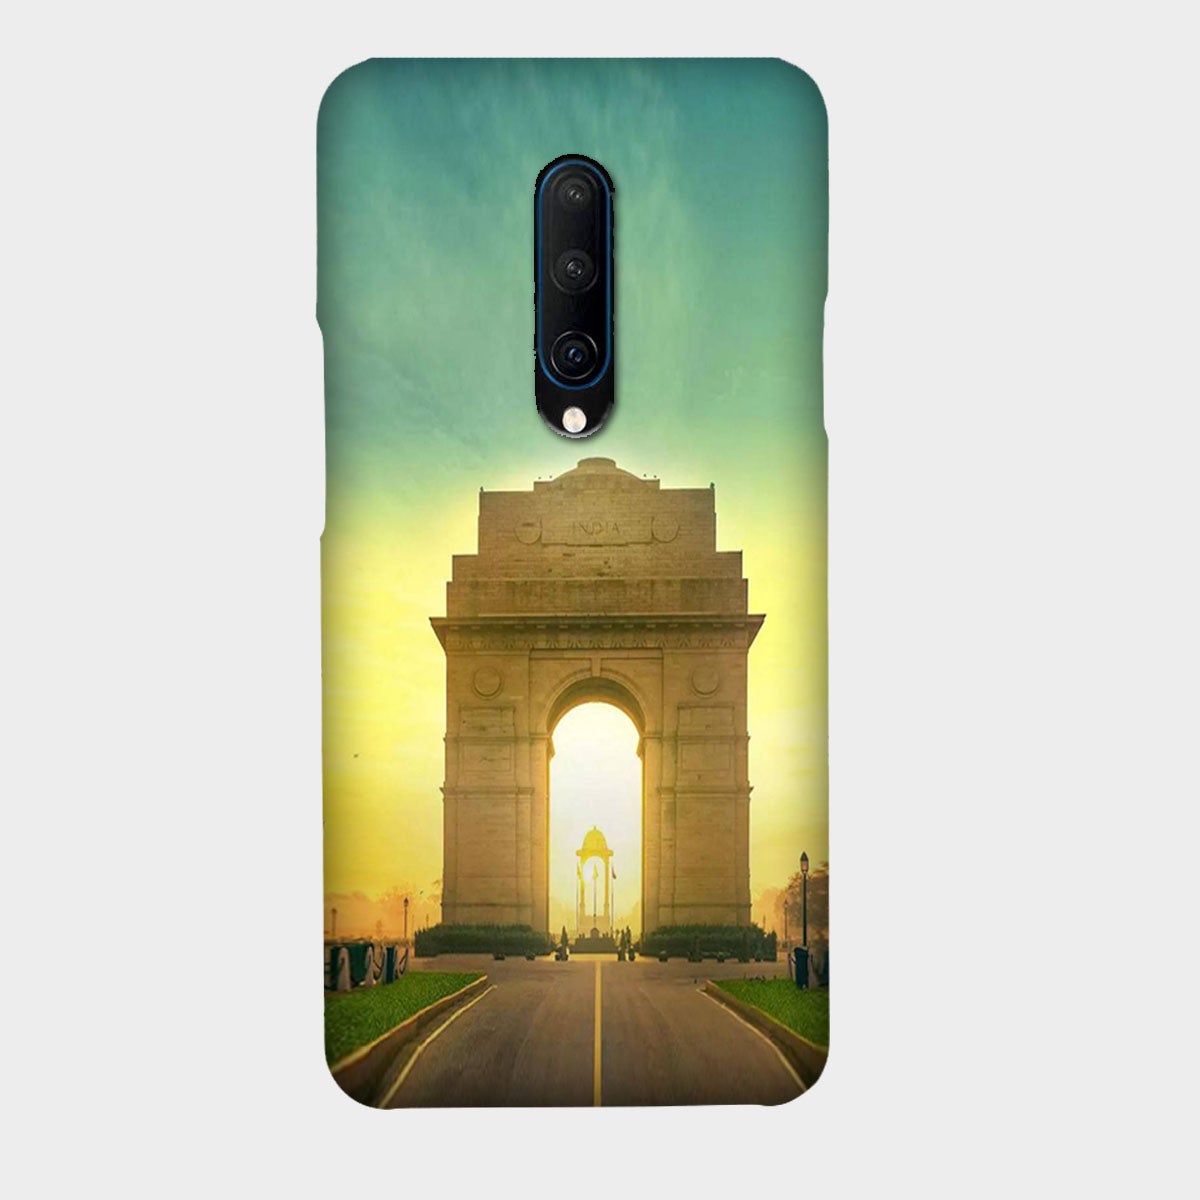 India Gate - Delhi - Mobile Phone Cover - Hard Case - OnePlus